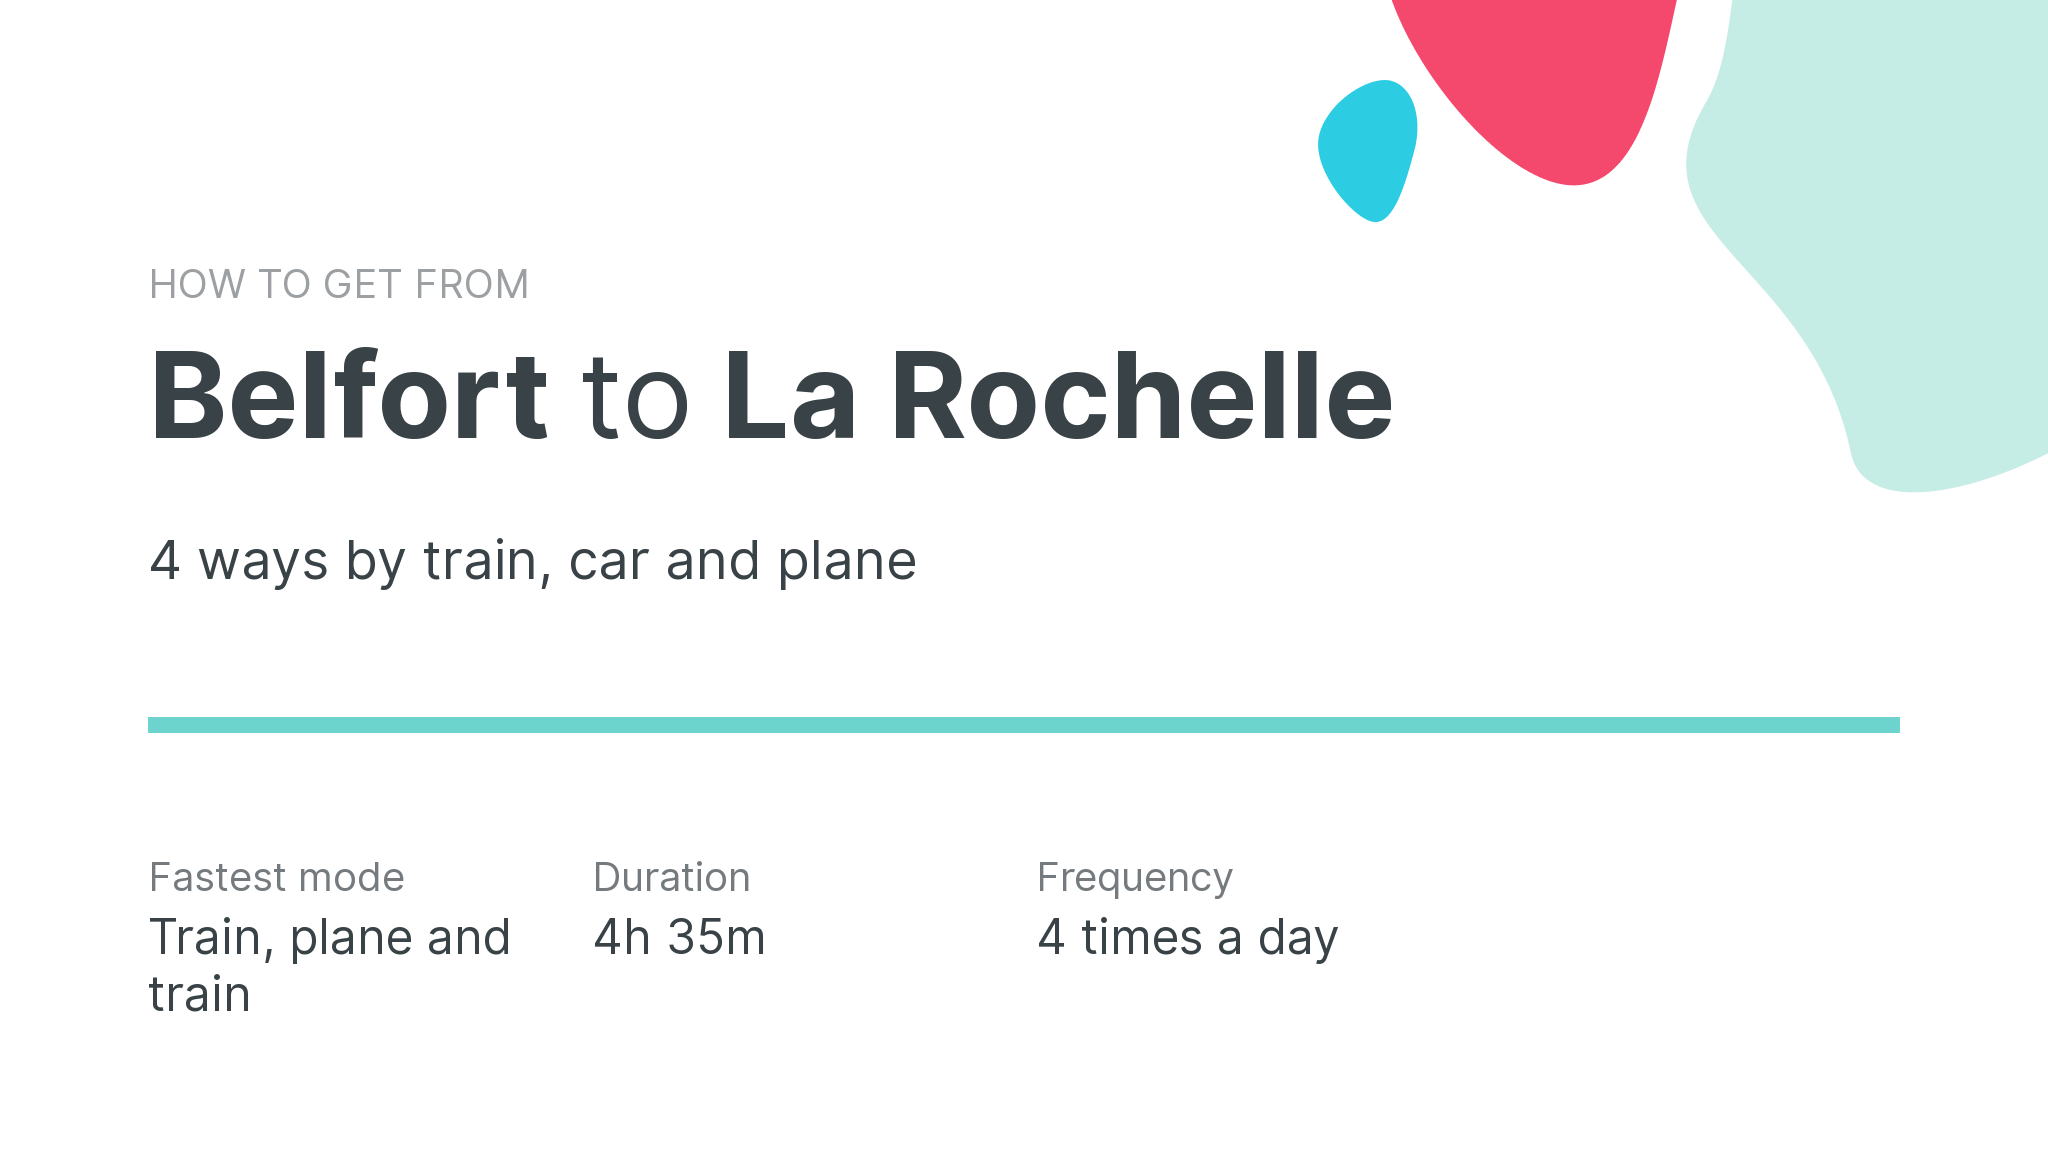 How do I get from Belfort to La Rochelle